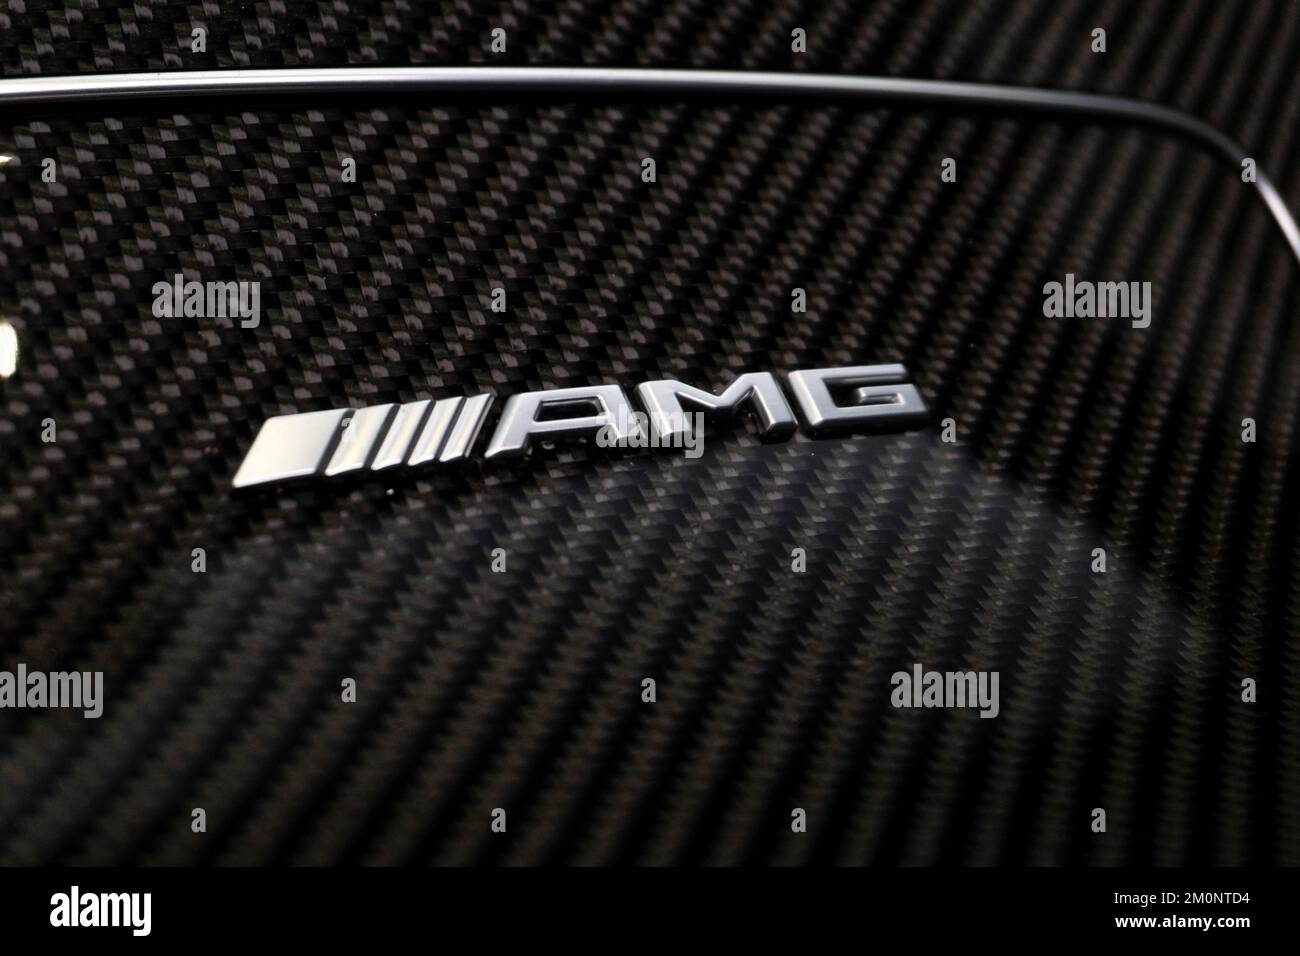 A Closeup Shot Of The Mercedes Benz Amg Badge On Carbon Fiber Center Console Stock Photo Alamy